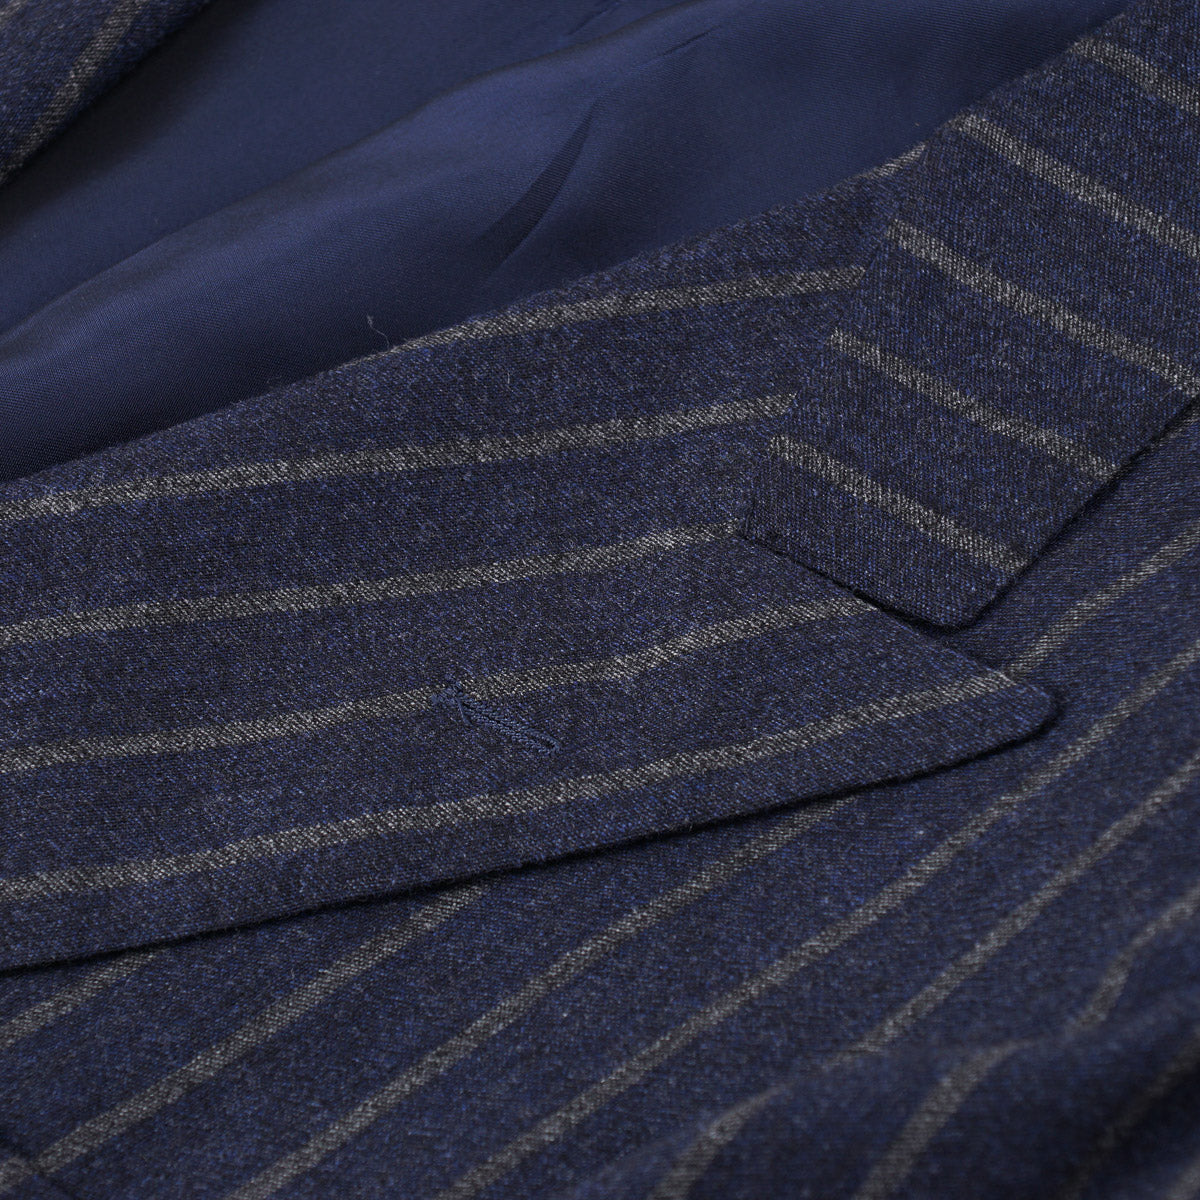 Sartorio Chalk Stripe Wool-Cashmere Suit - Top Shelf Apparel